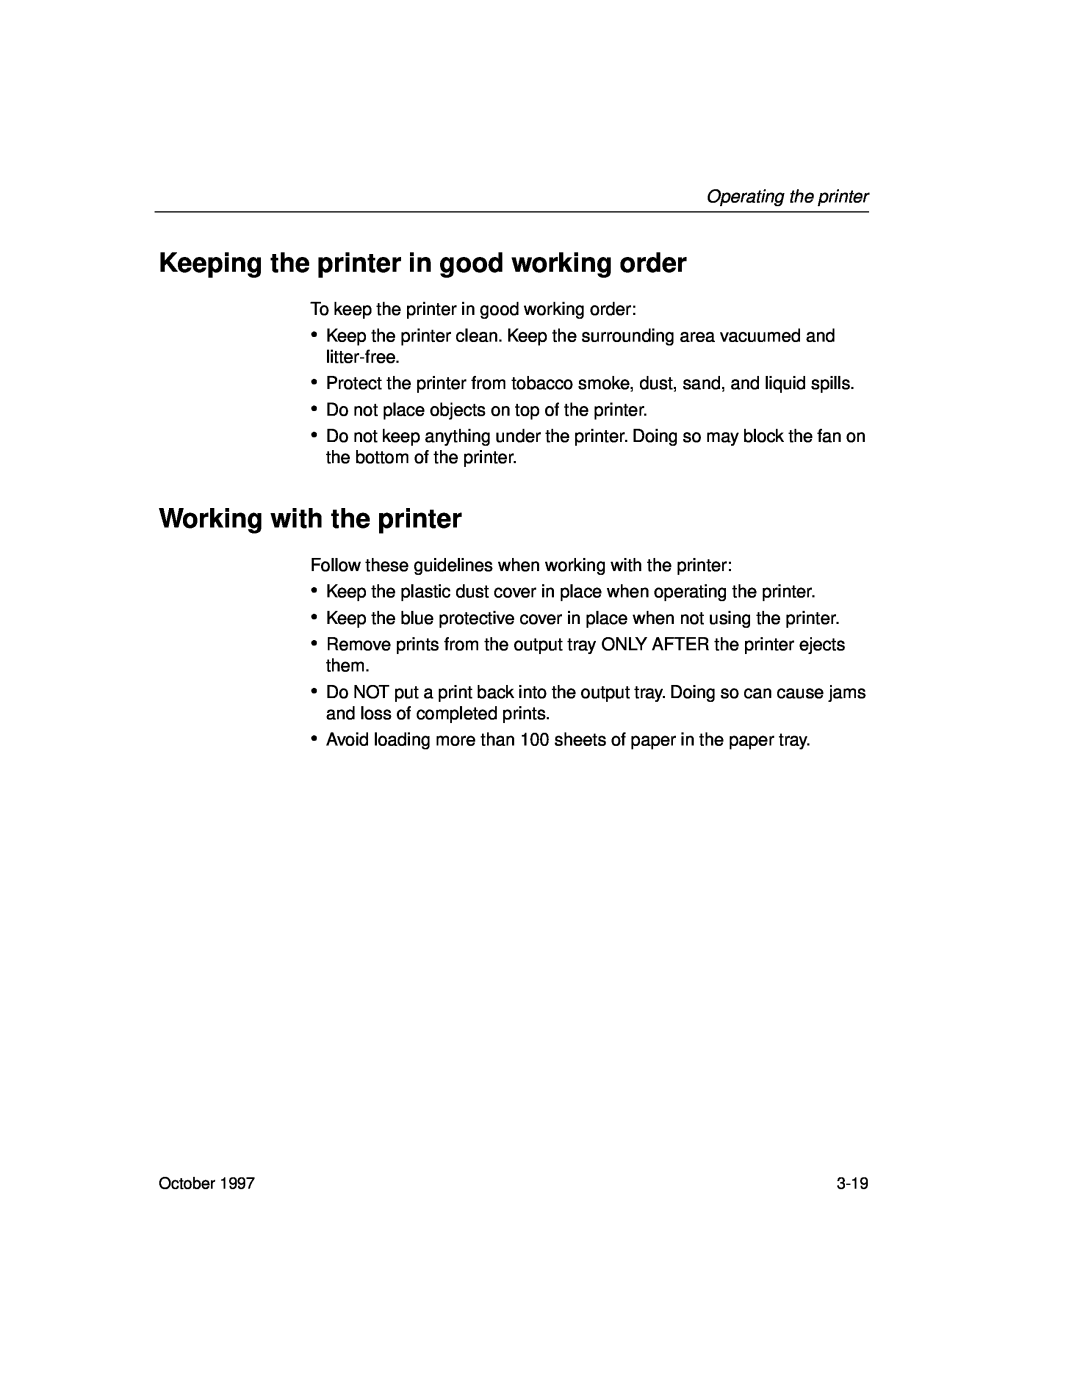 Kodak 8650 manual Keeping the printer in good working order, Working with the printer, Operating the printer 